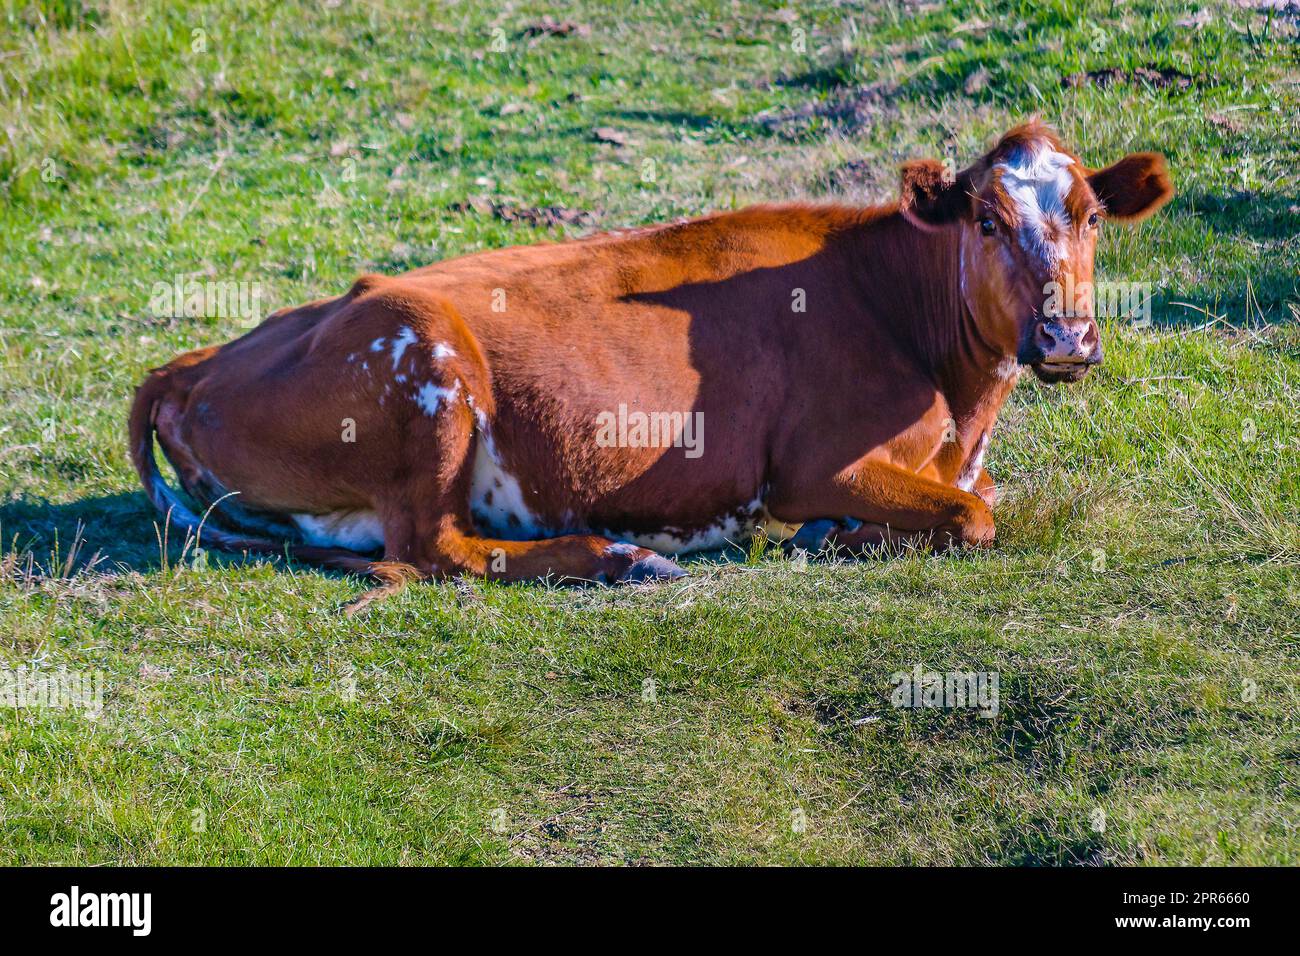 Hereford breed cow resting free at countryside landscape, maldonado, uruguay Stock Photo